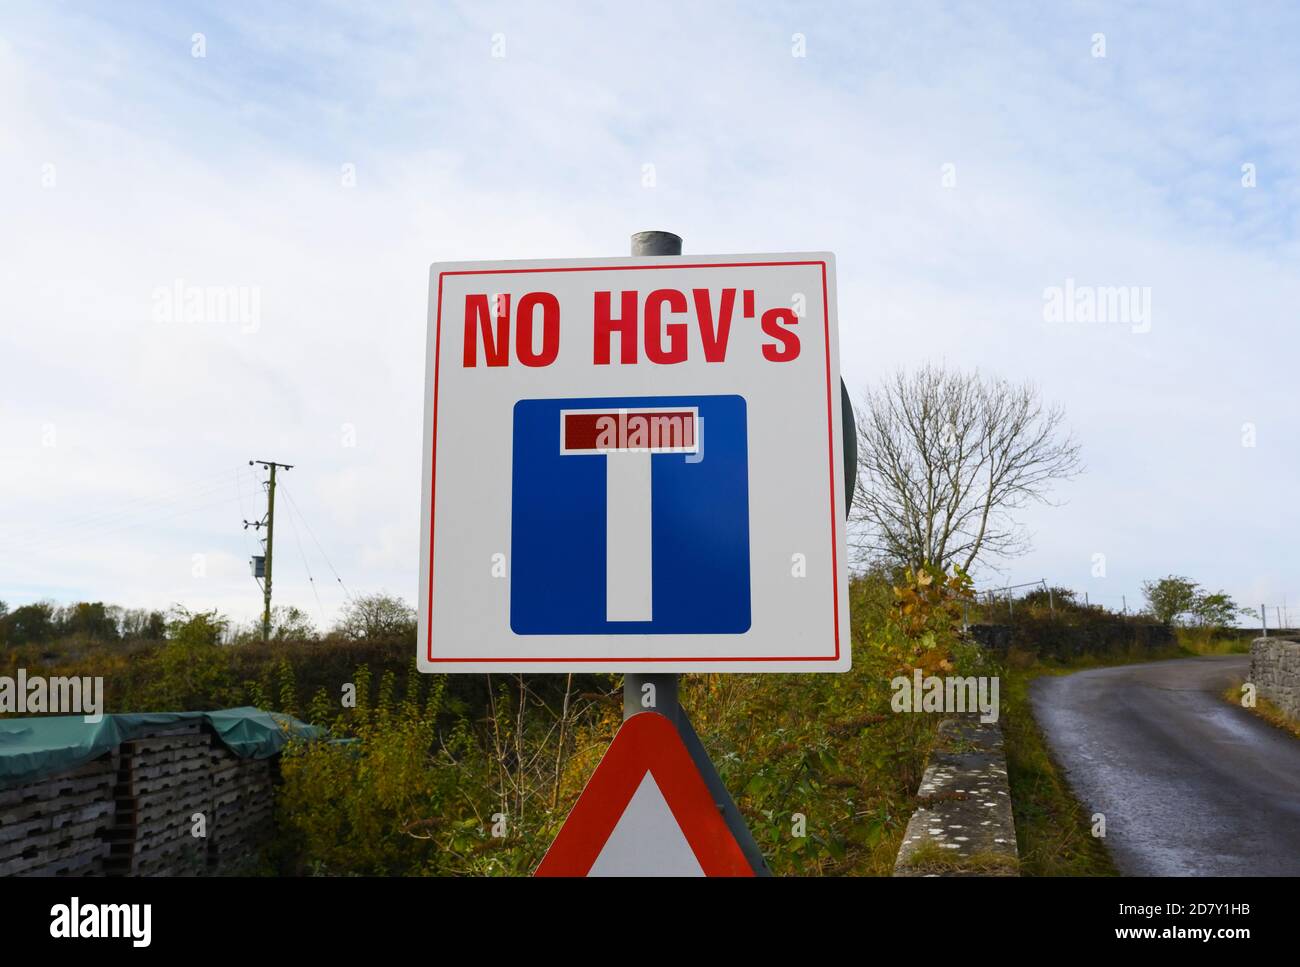 Warning sign with misplaced apostrophe, 'NO HGV's'. Boundary Bank Lane, Kendal, Cumbria, England, United Kingdom. Stock Photo